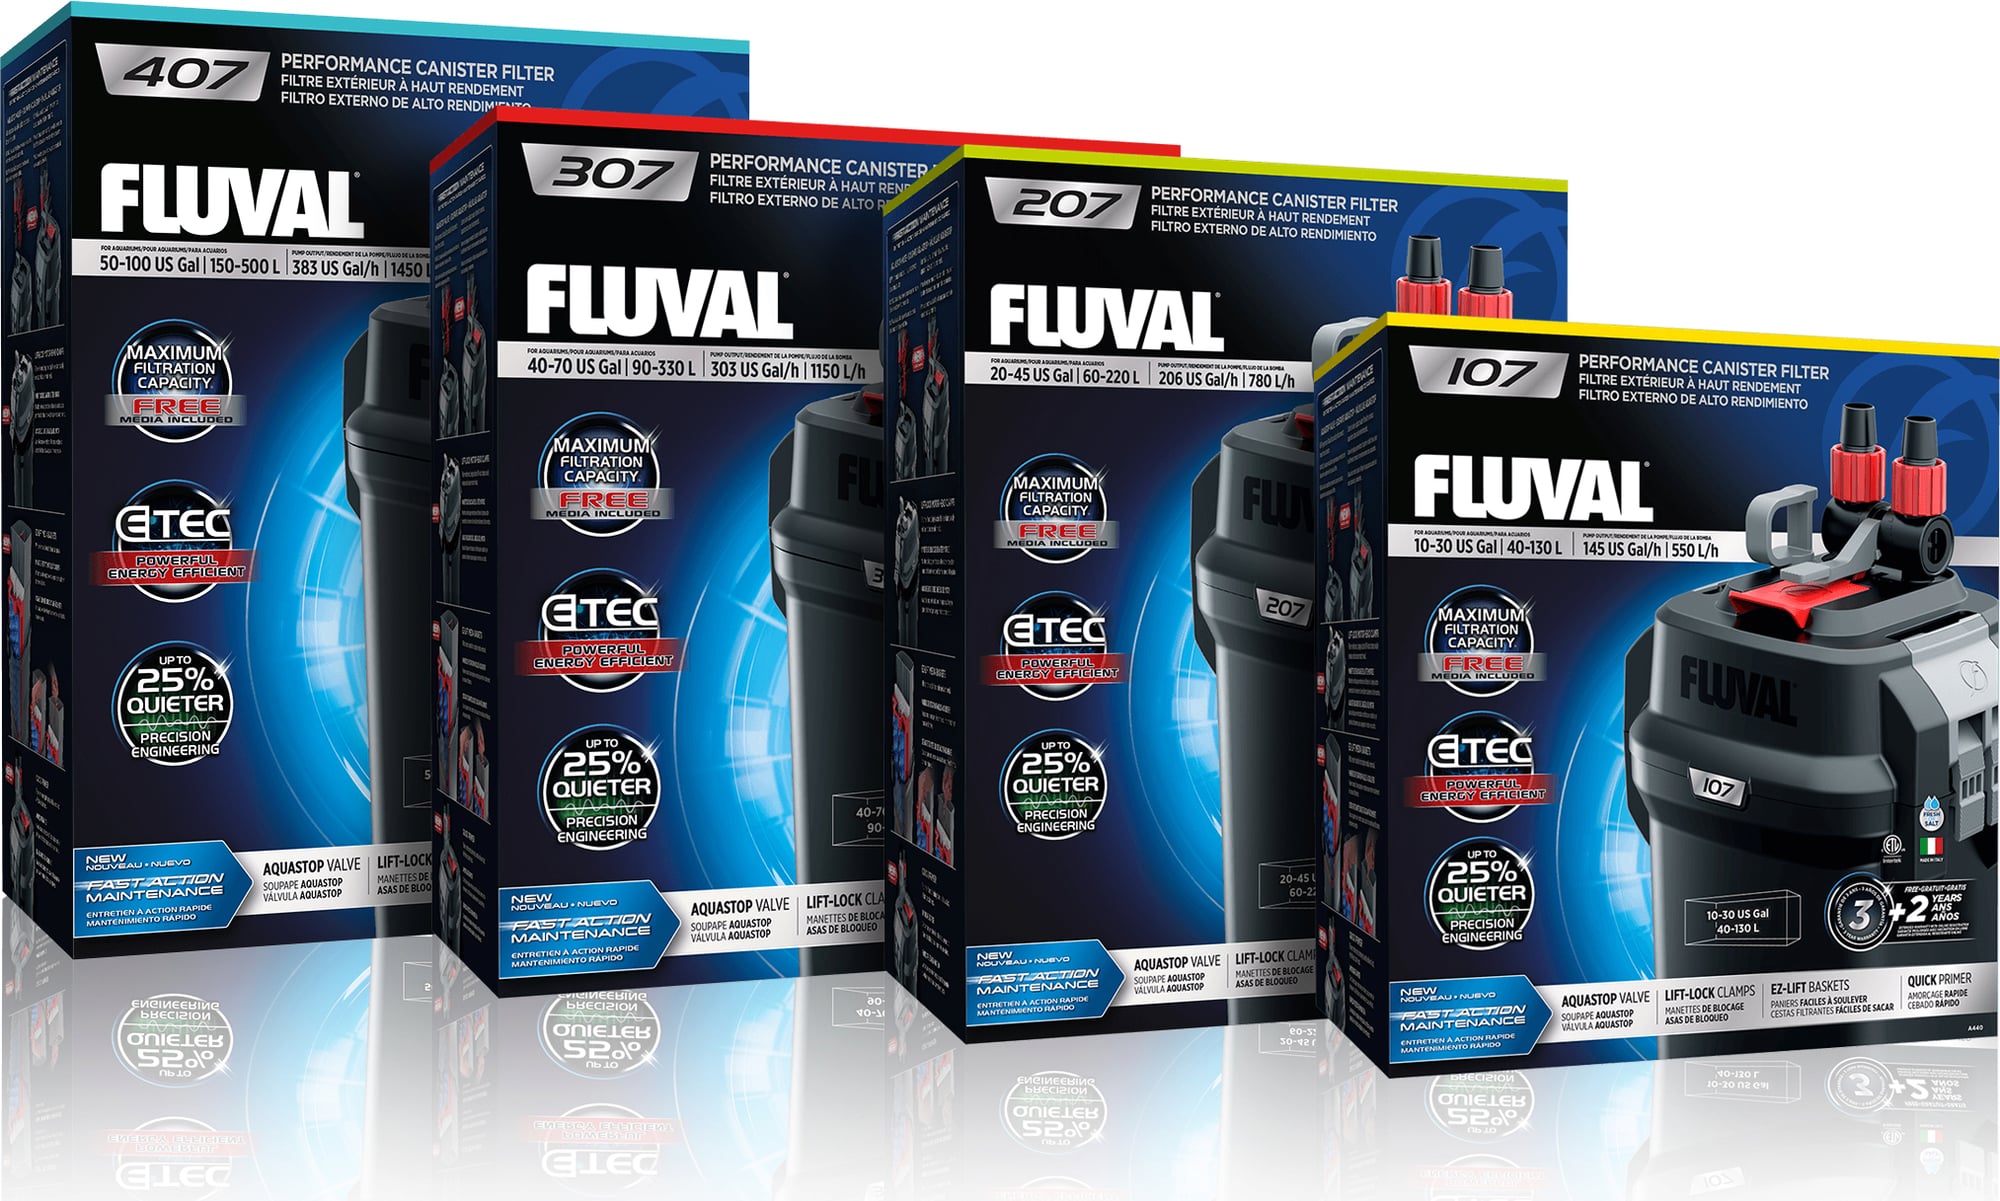 Fluval 07 Series External FIlter